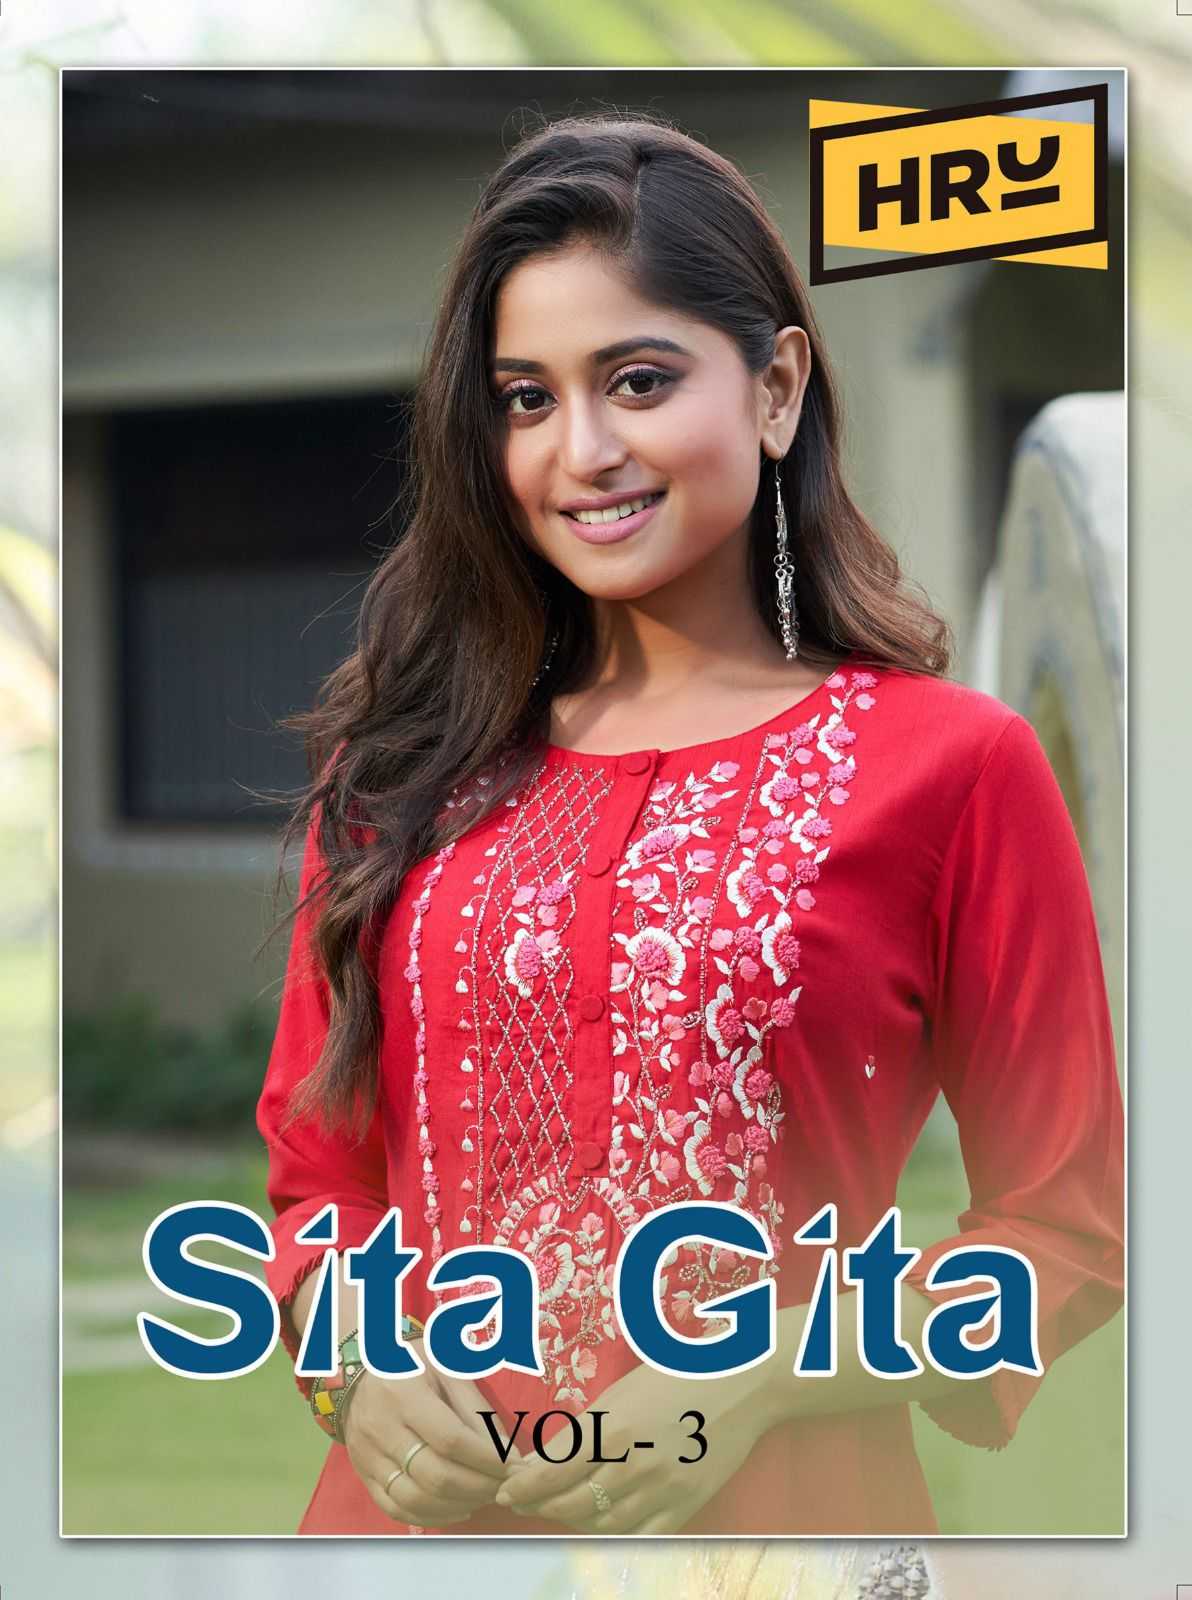 hru presents sita gita vol 3 traditional nylon full stitch straight cut long kurti